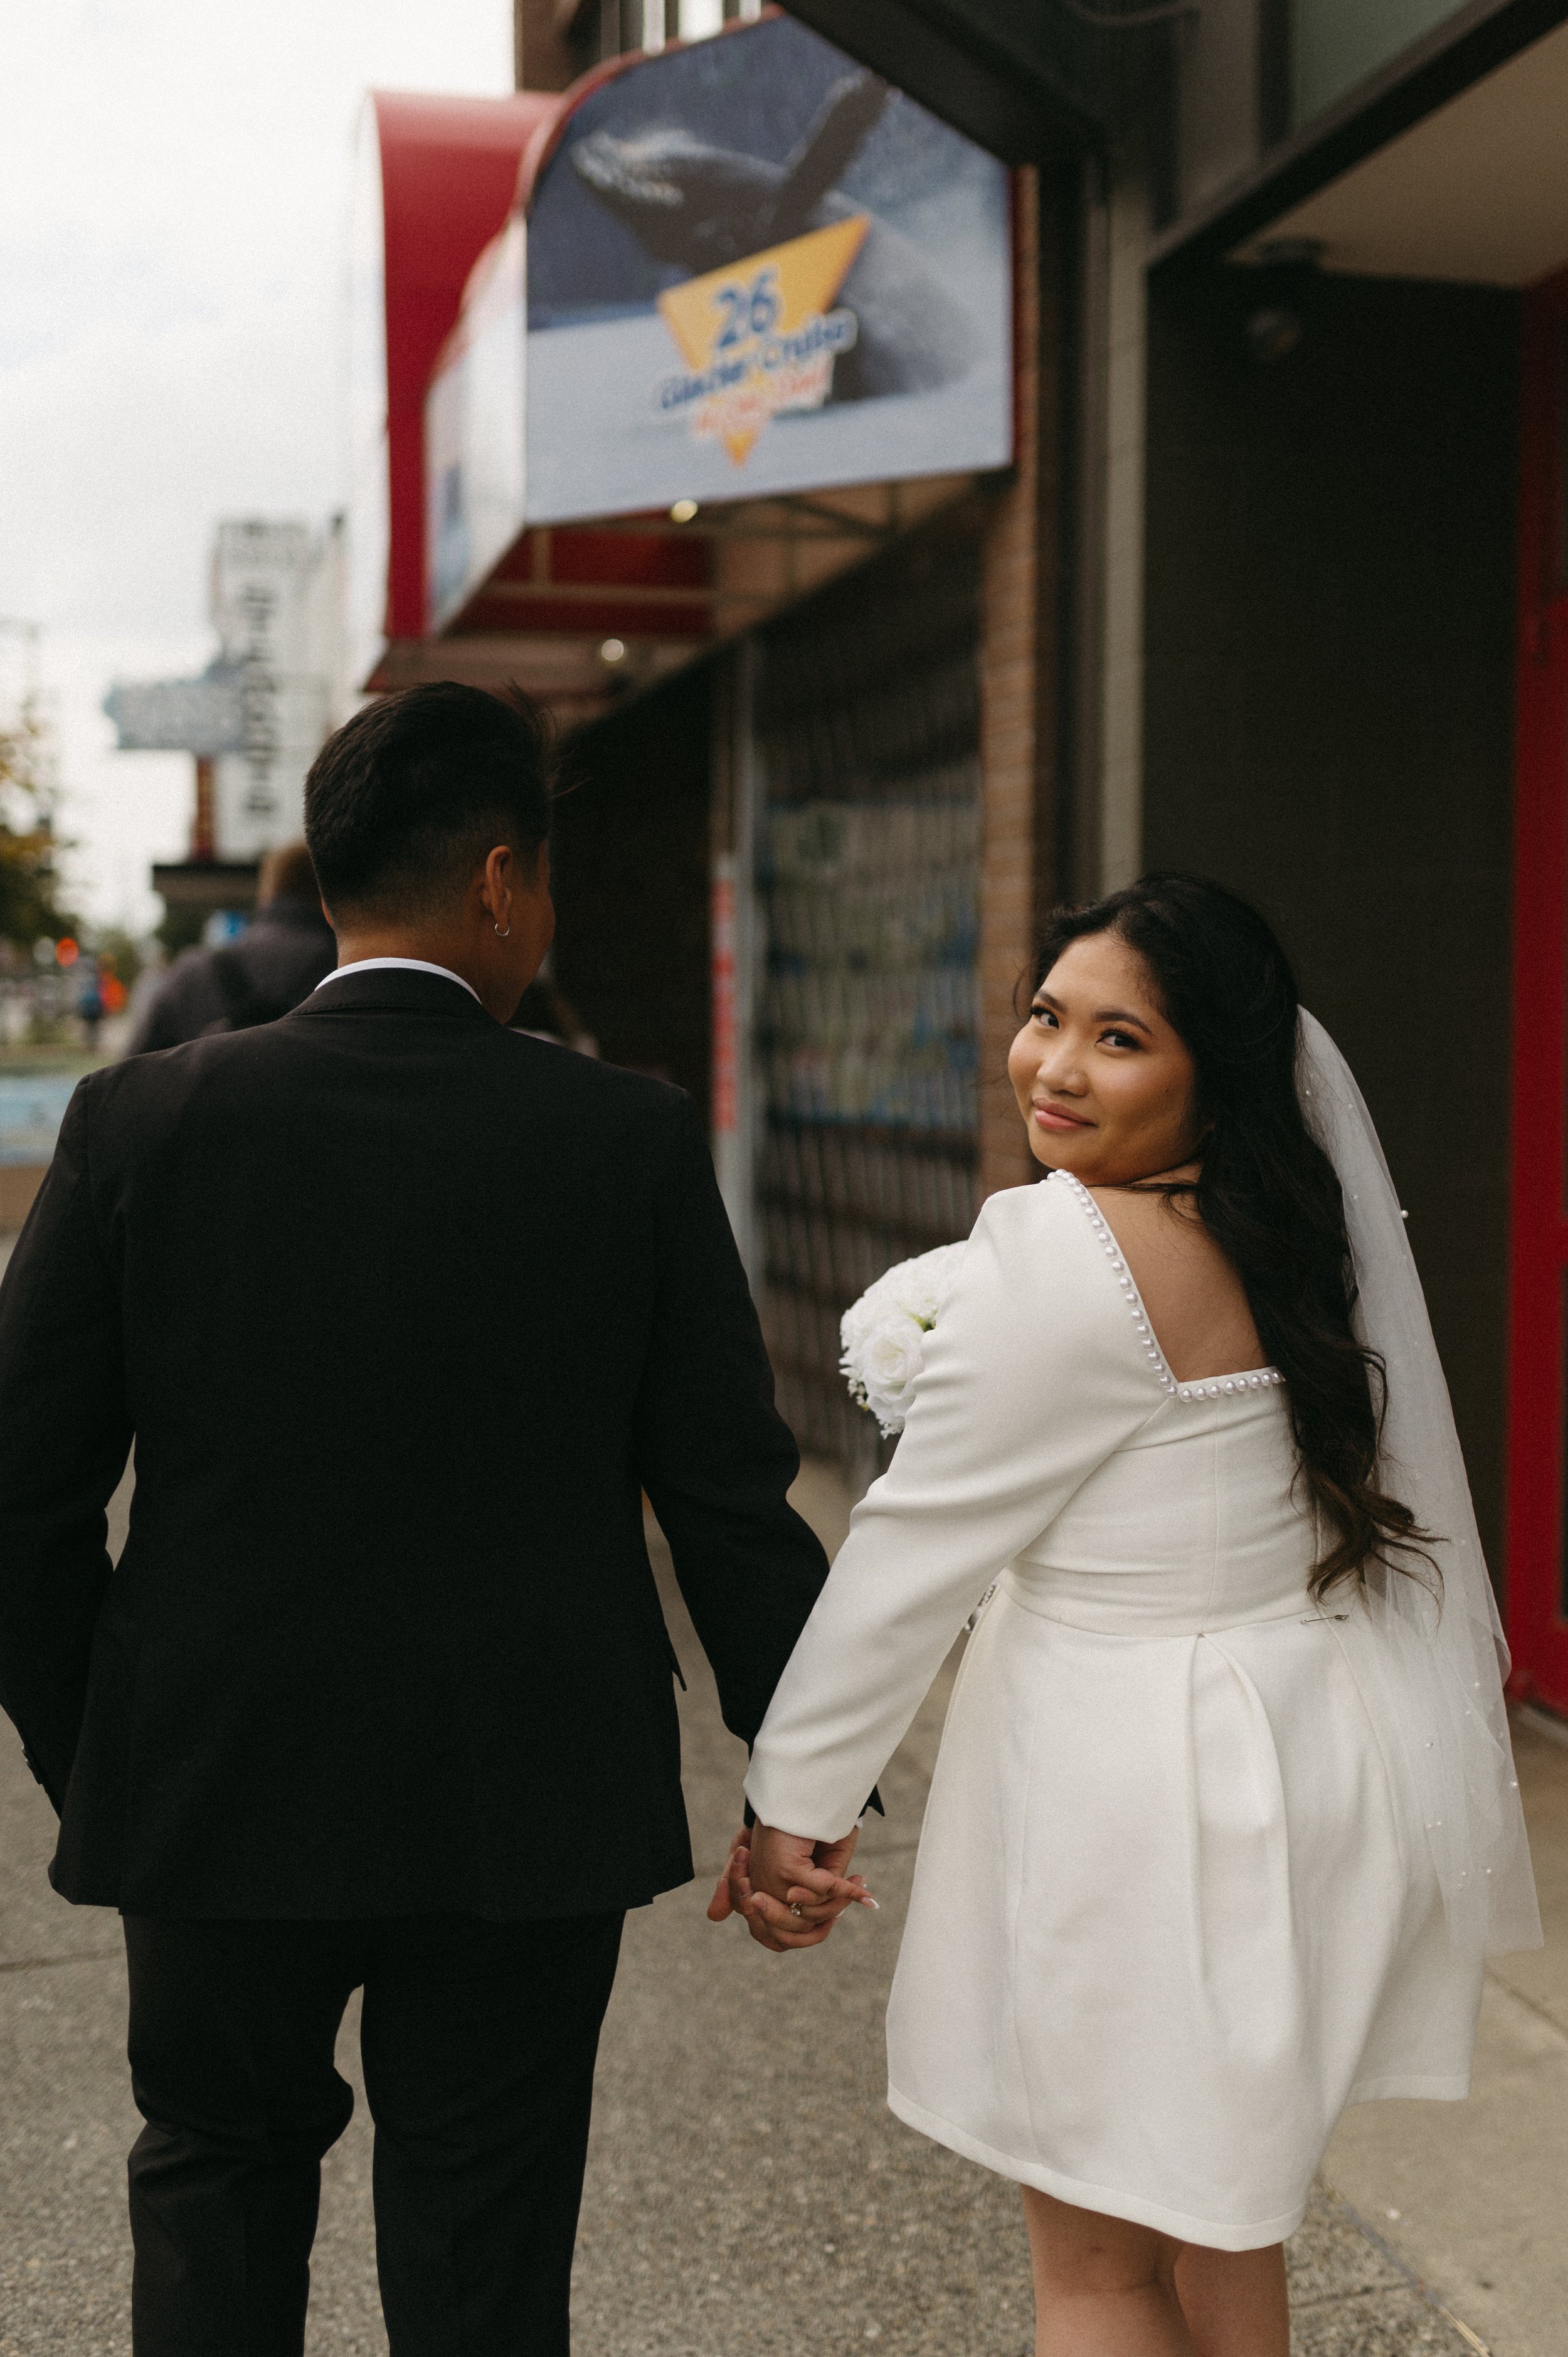 CITY WEDDING BRIDALS IN DOWNTOWN ANCHORAGE, ALASKA